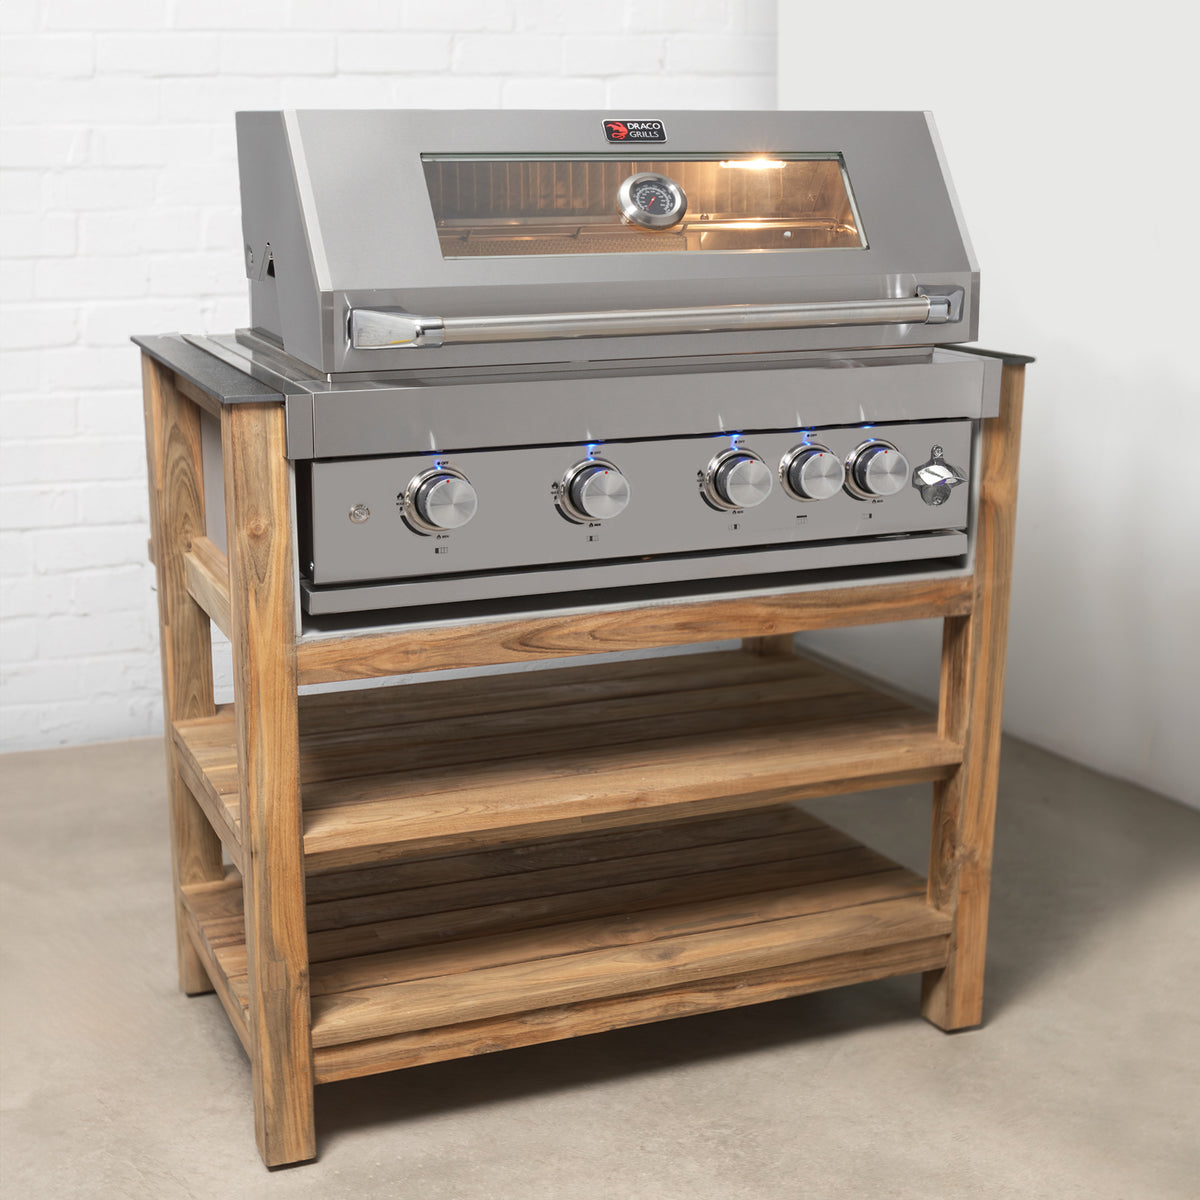 Draco Grills Teak 4 Burner Outdoor Kitchen with Modular Triple Drawer Unit, Double Cupboard, Sink, Double Fridge